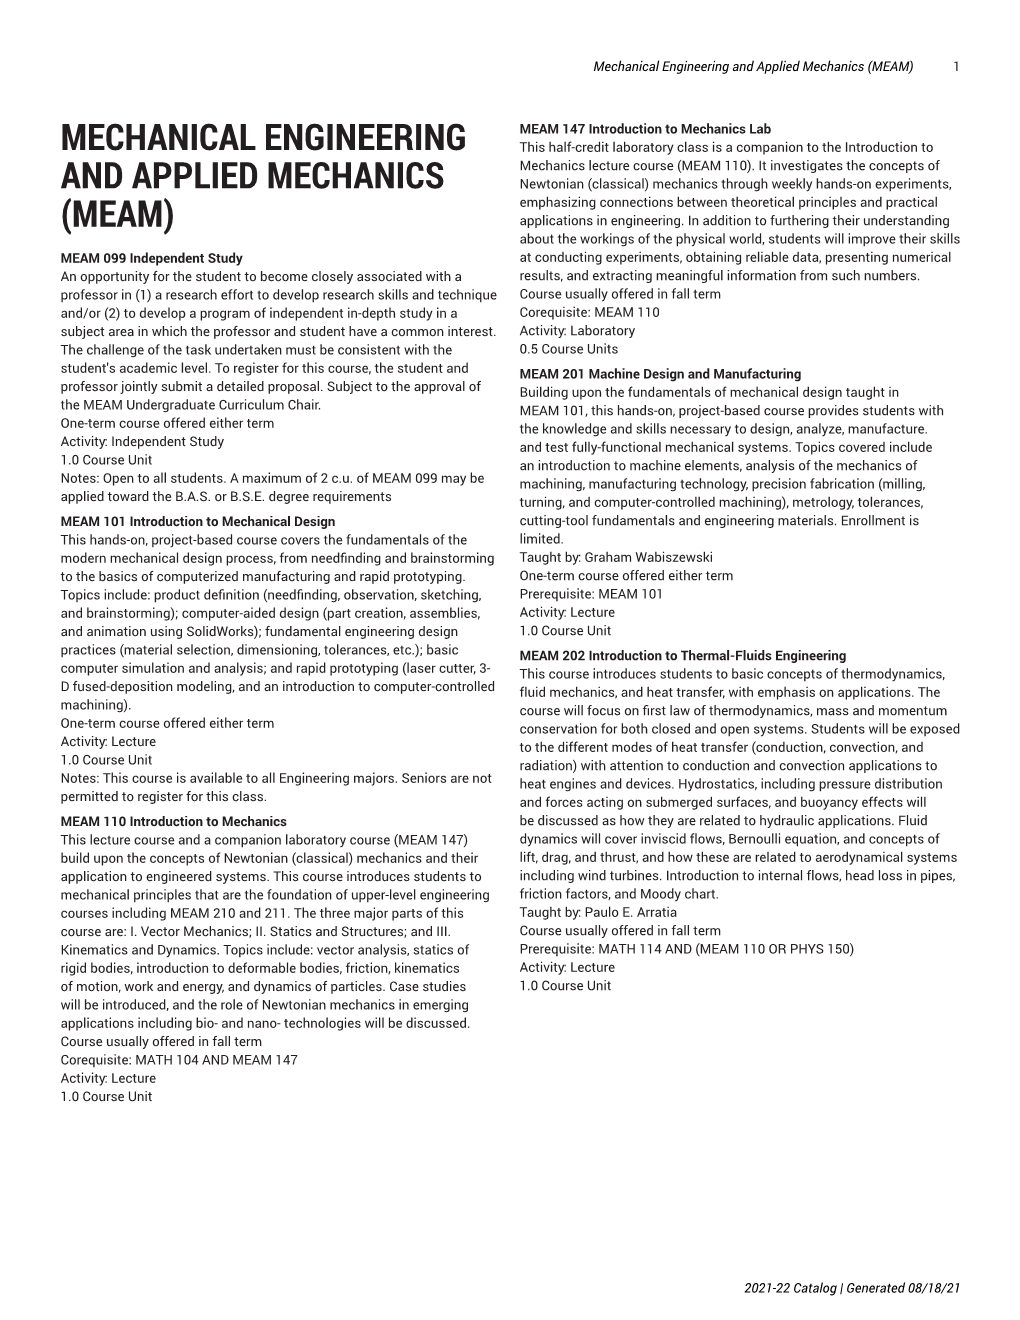 Mechanical Engineering and Applied Mechanics (MEAM) 1